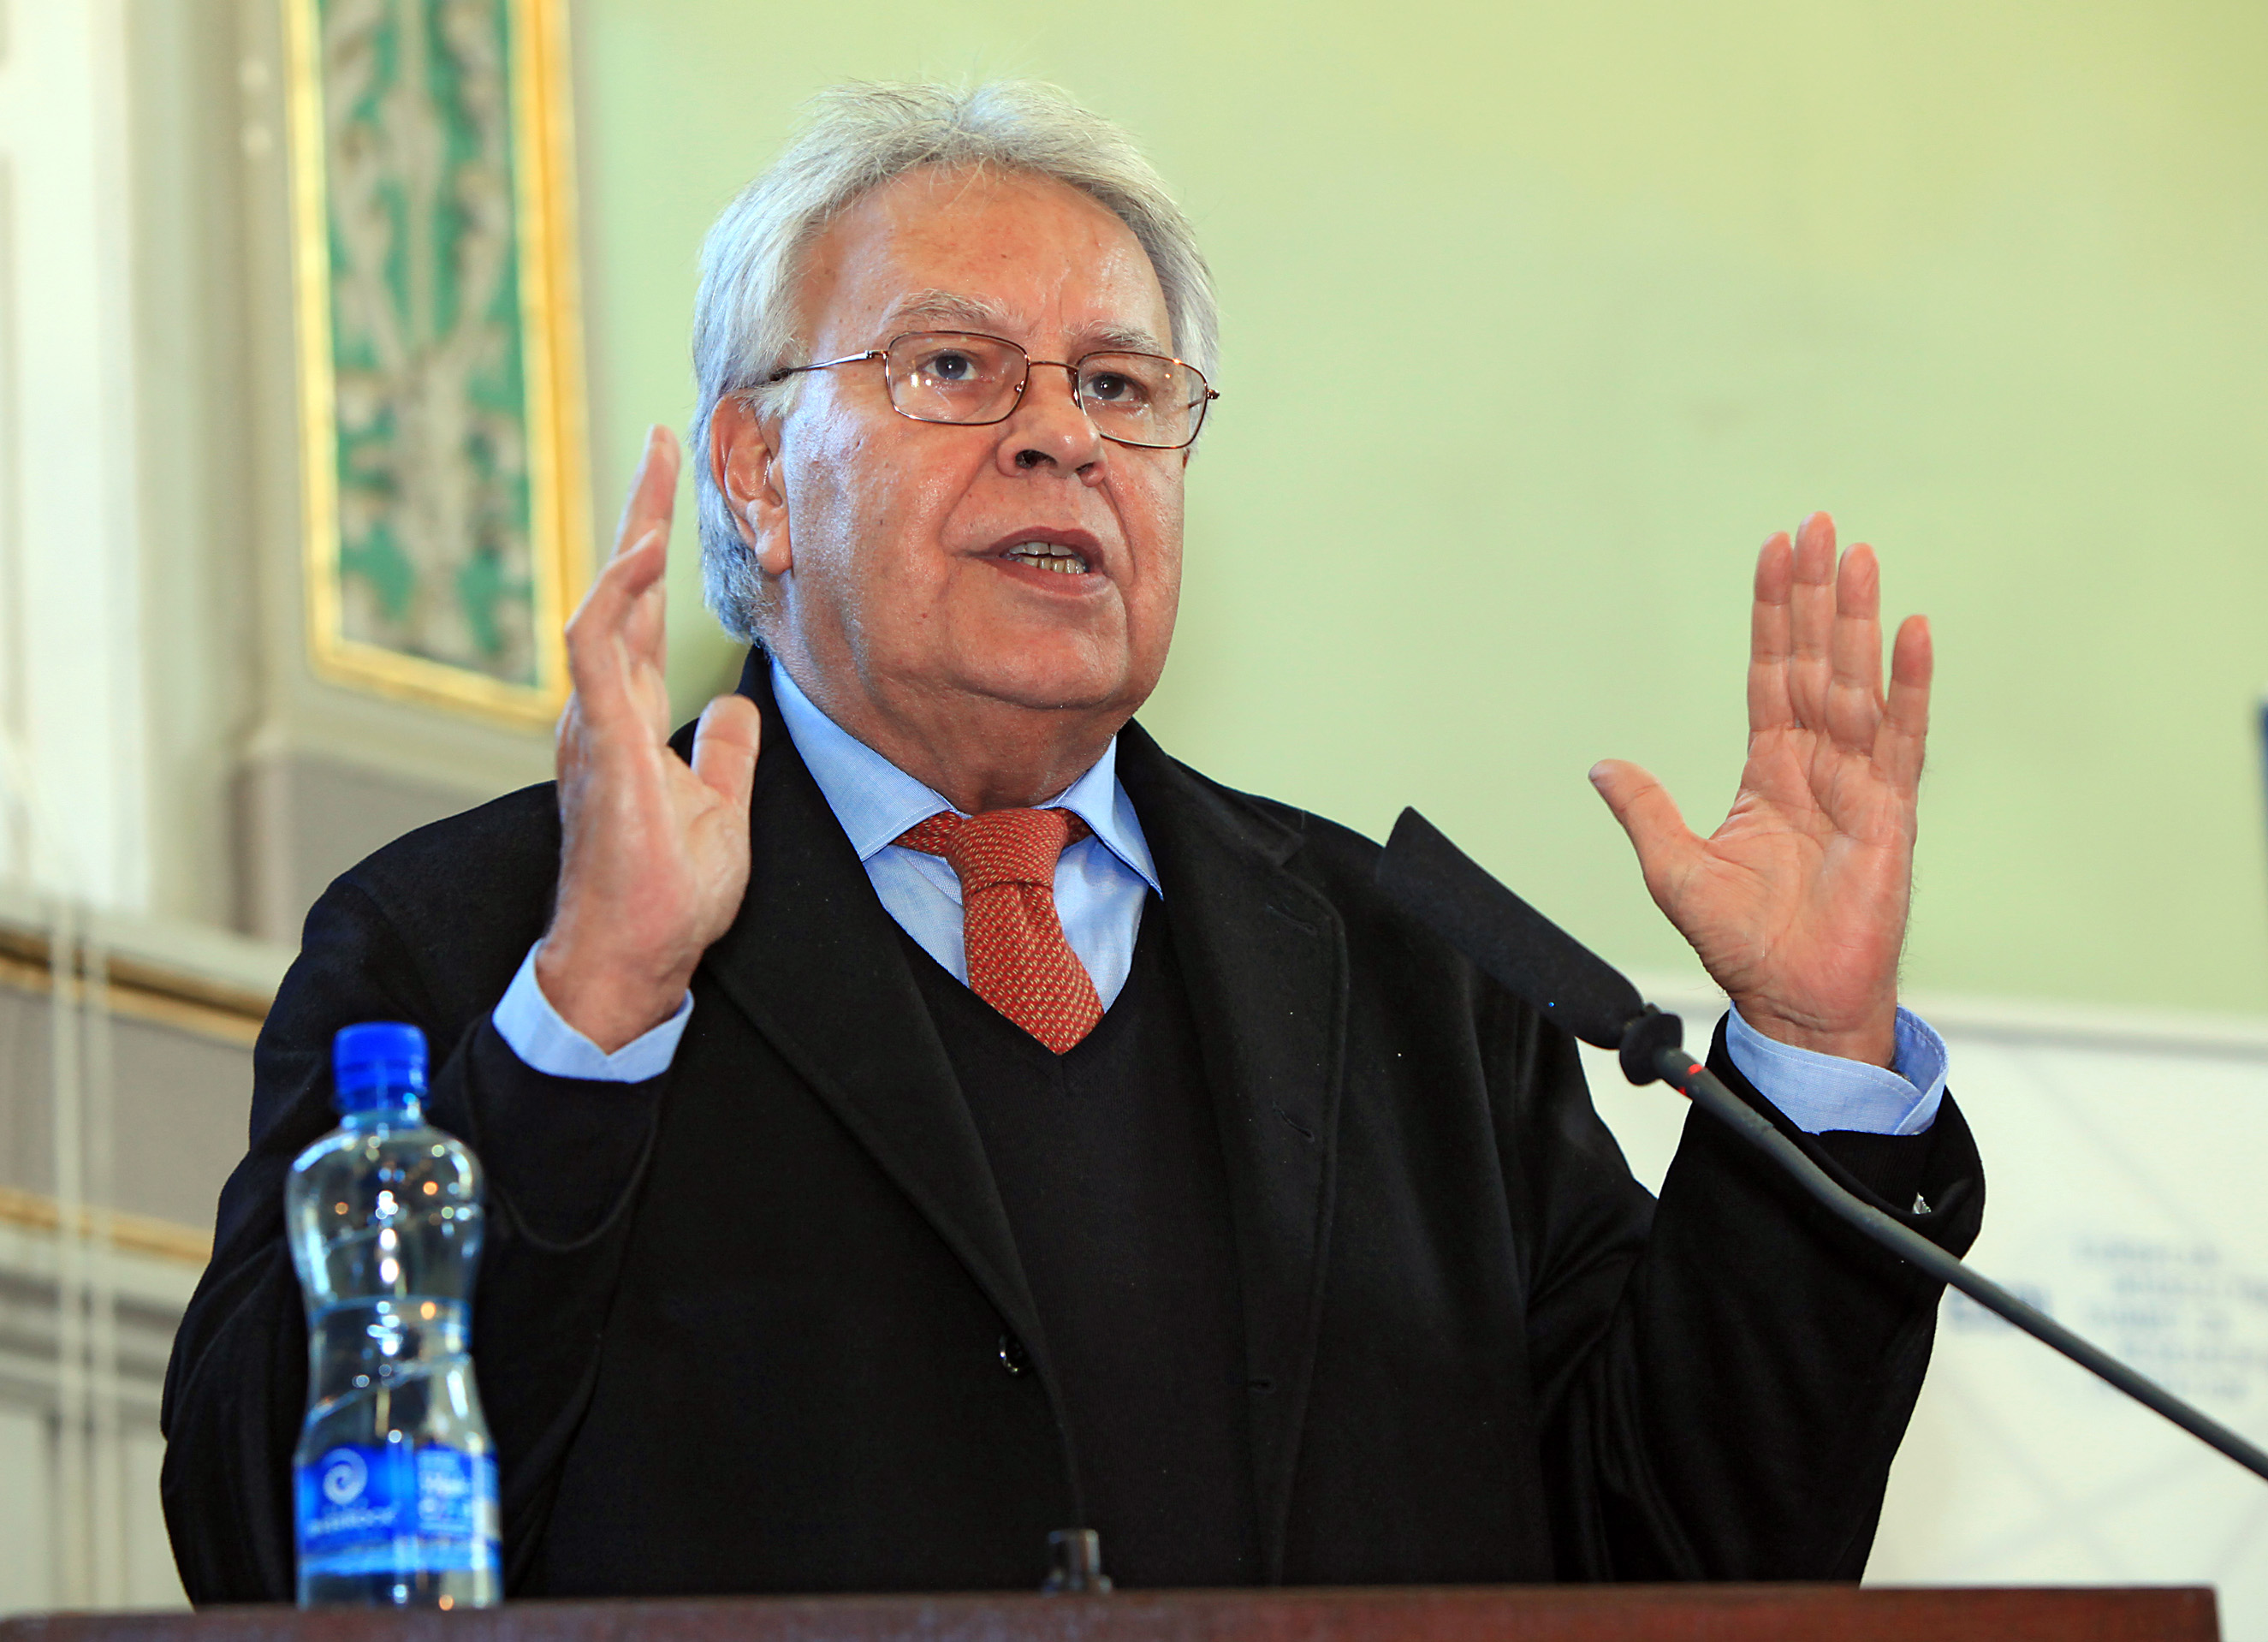 Mr. Felipe González Márquez, Chairman of the Advisory Board of Atomium Culture